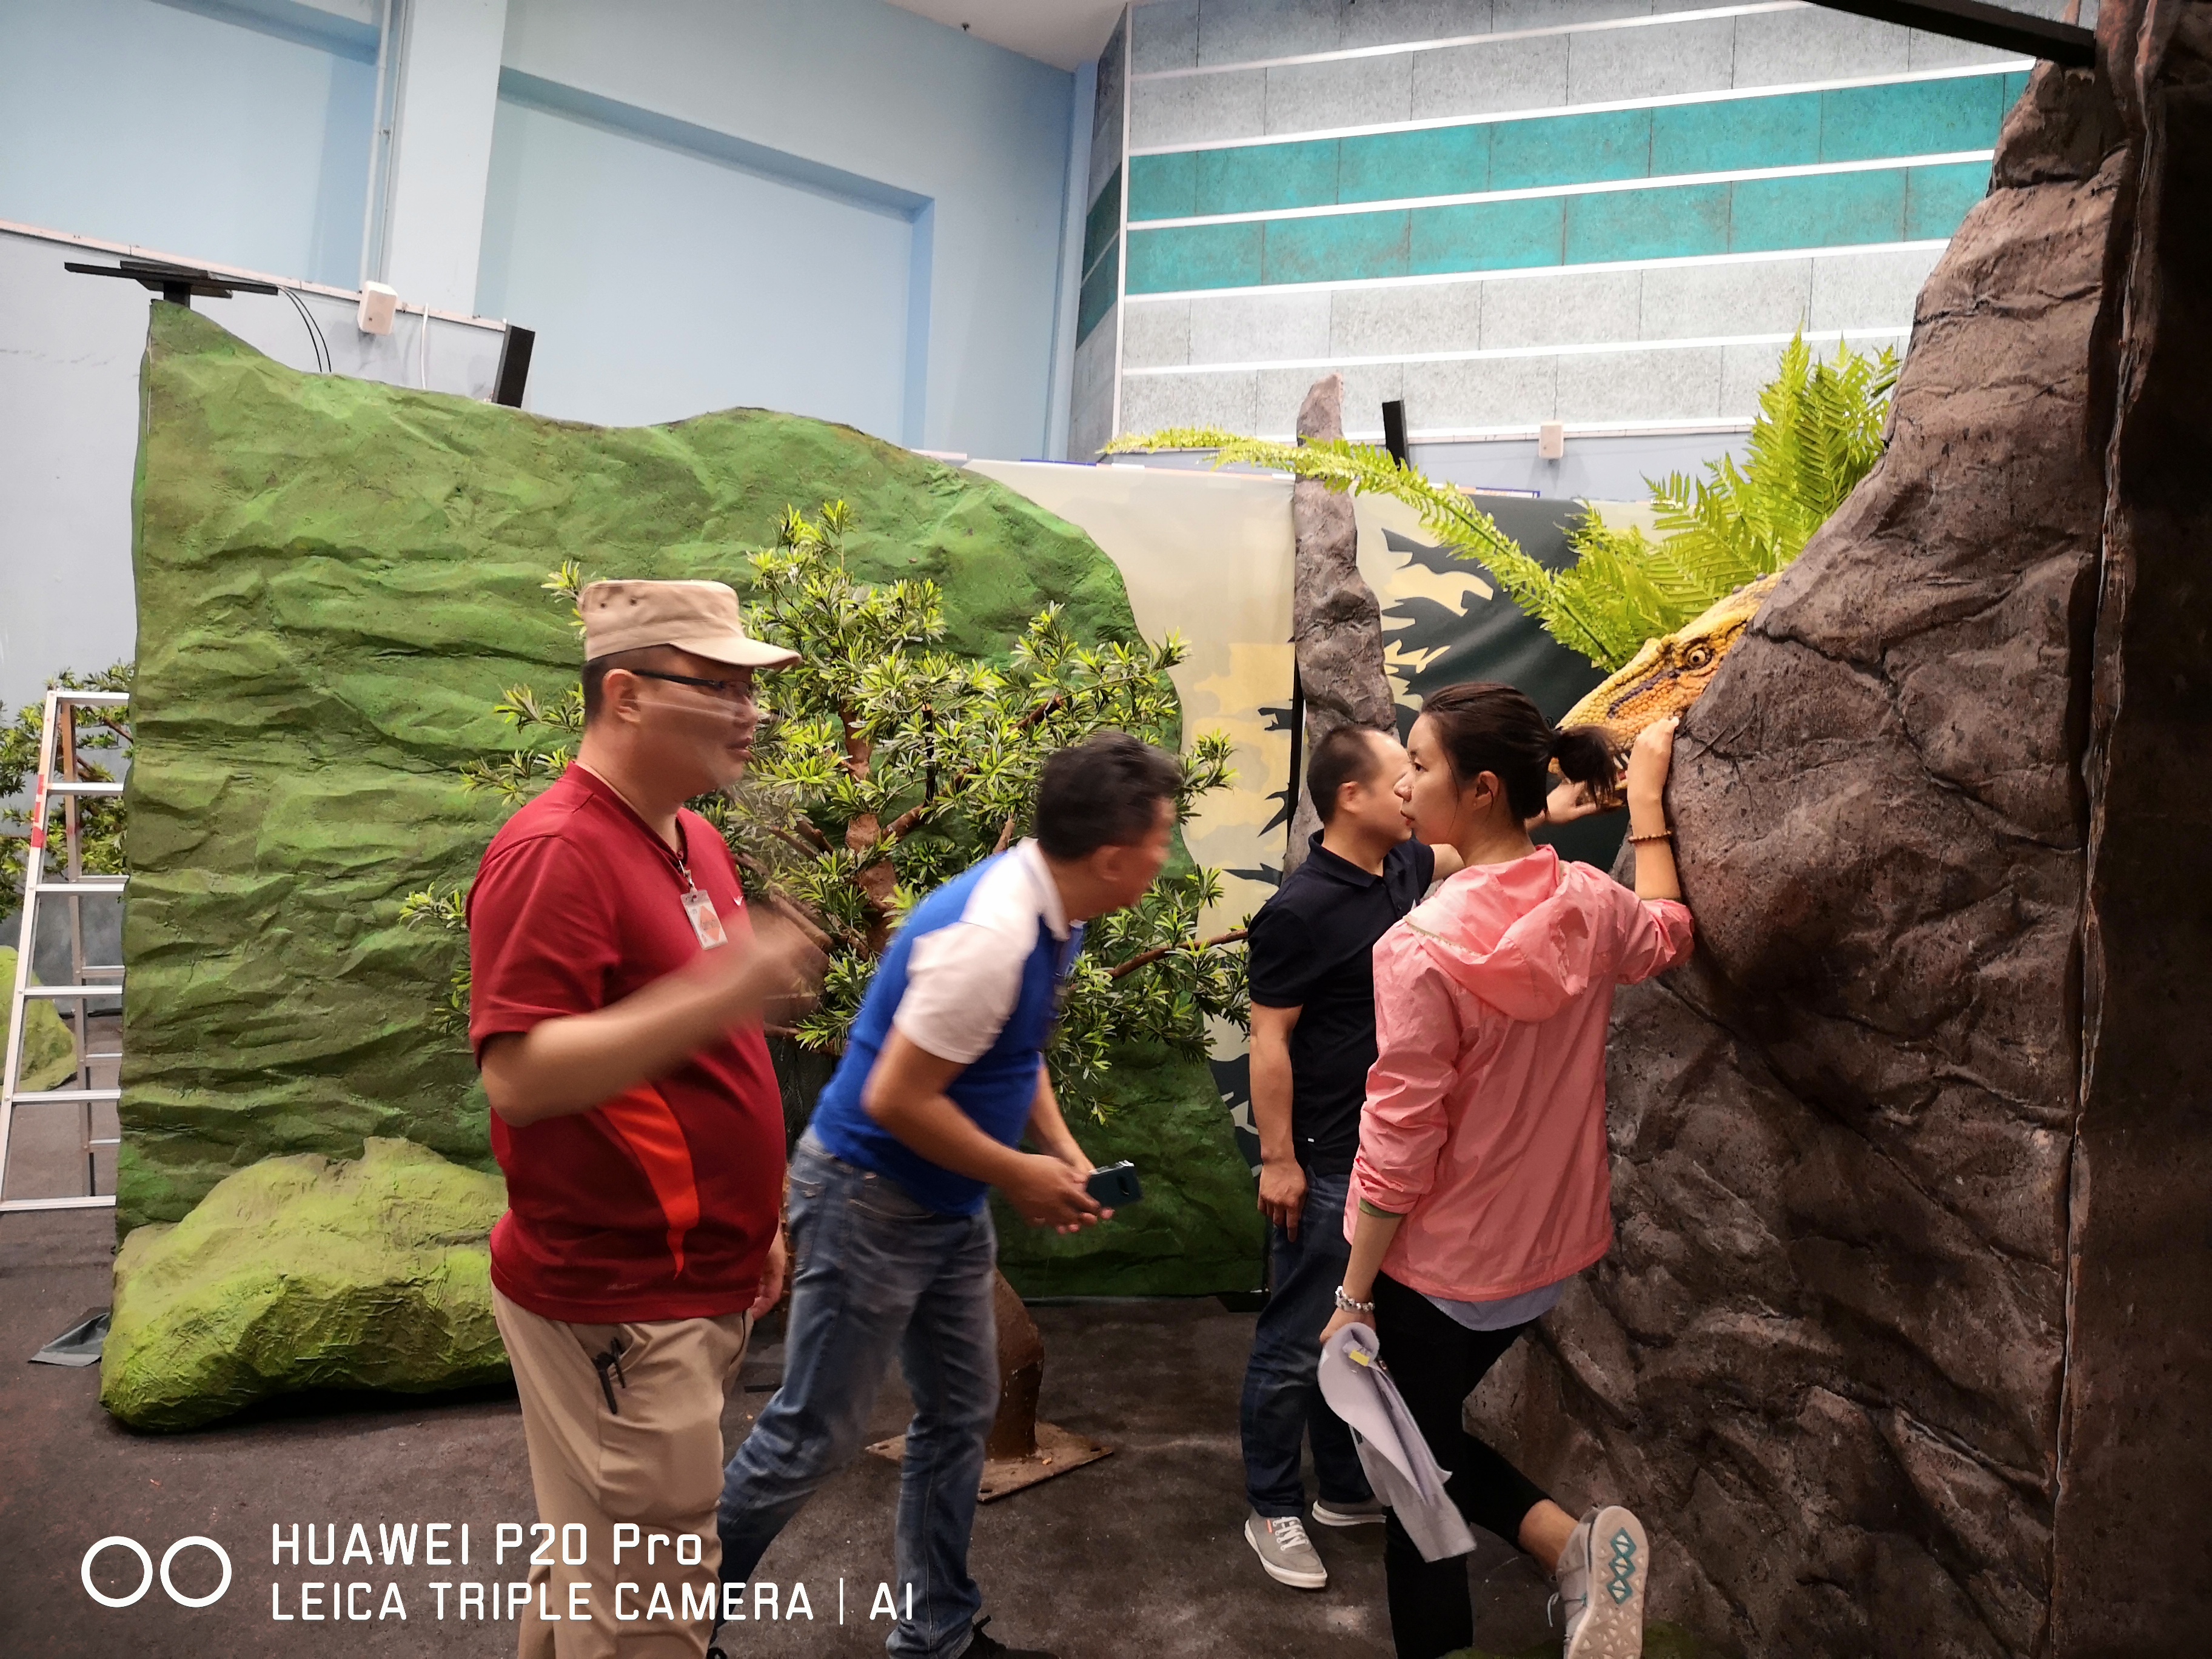 Science Centre Singapore - Dino Quest Exhibition 